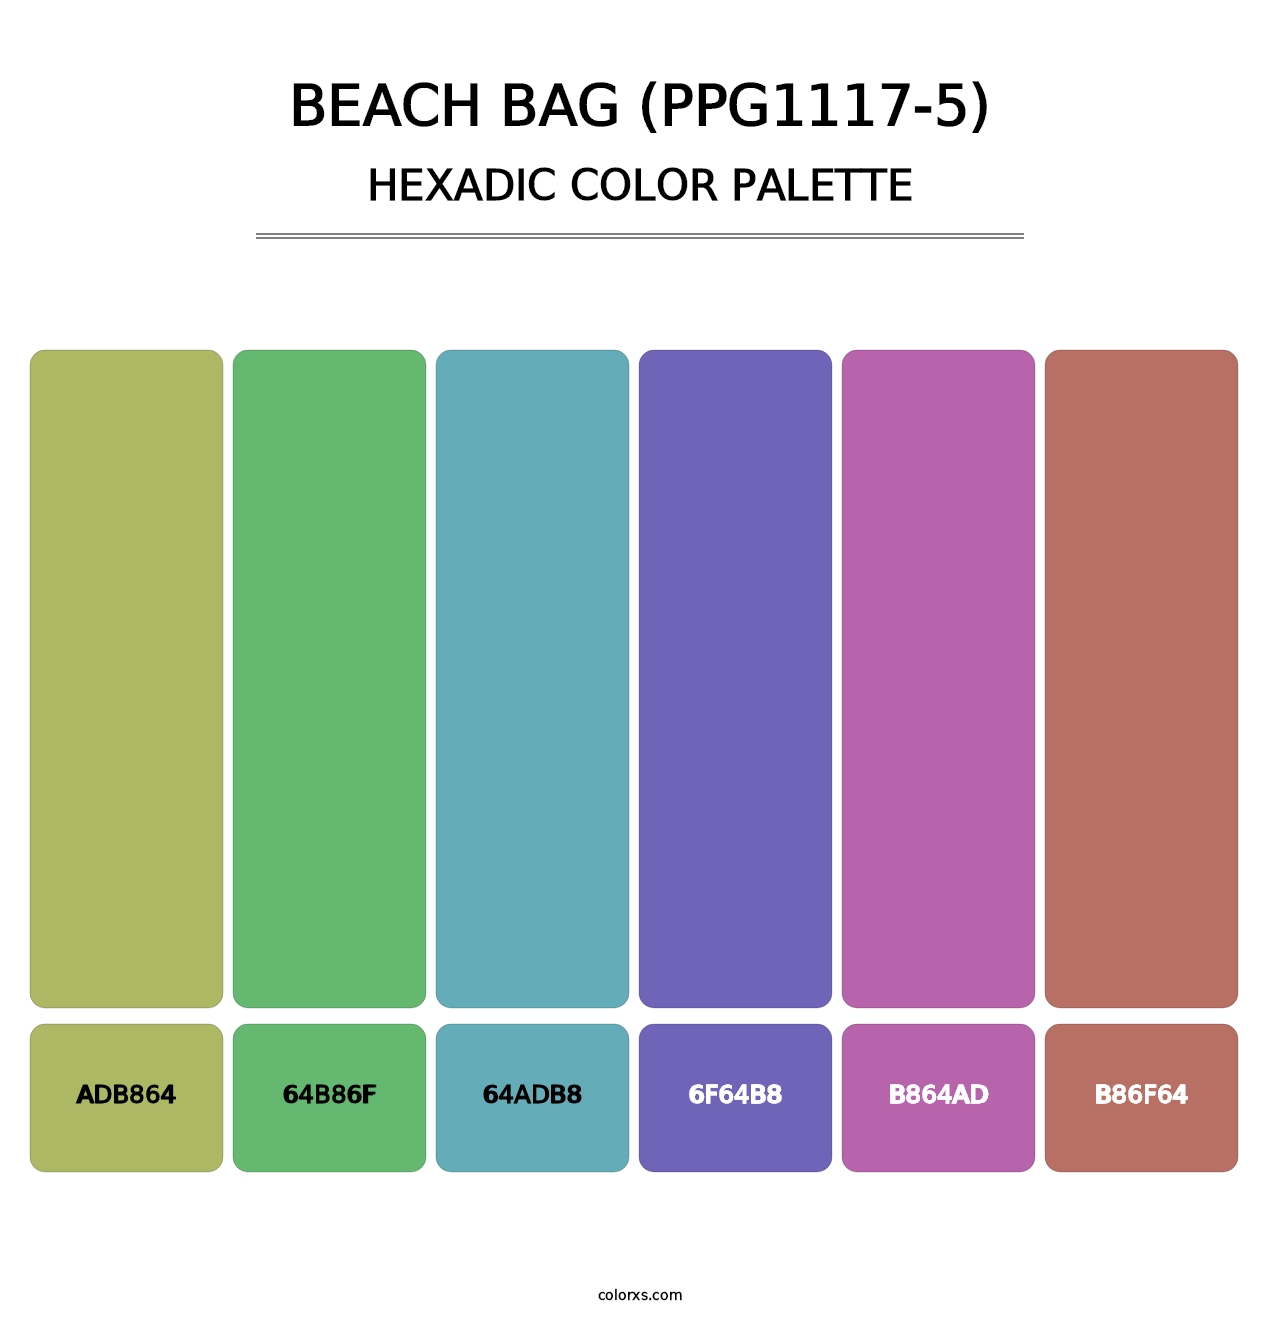 Beach Bag (PPG1117-5) - Hexadic Color Palette